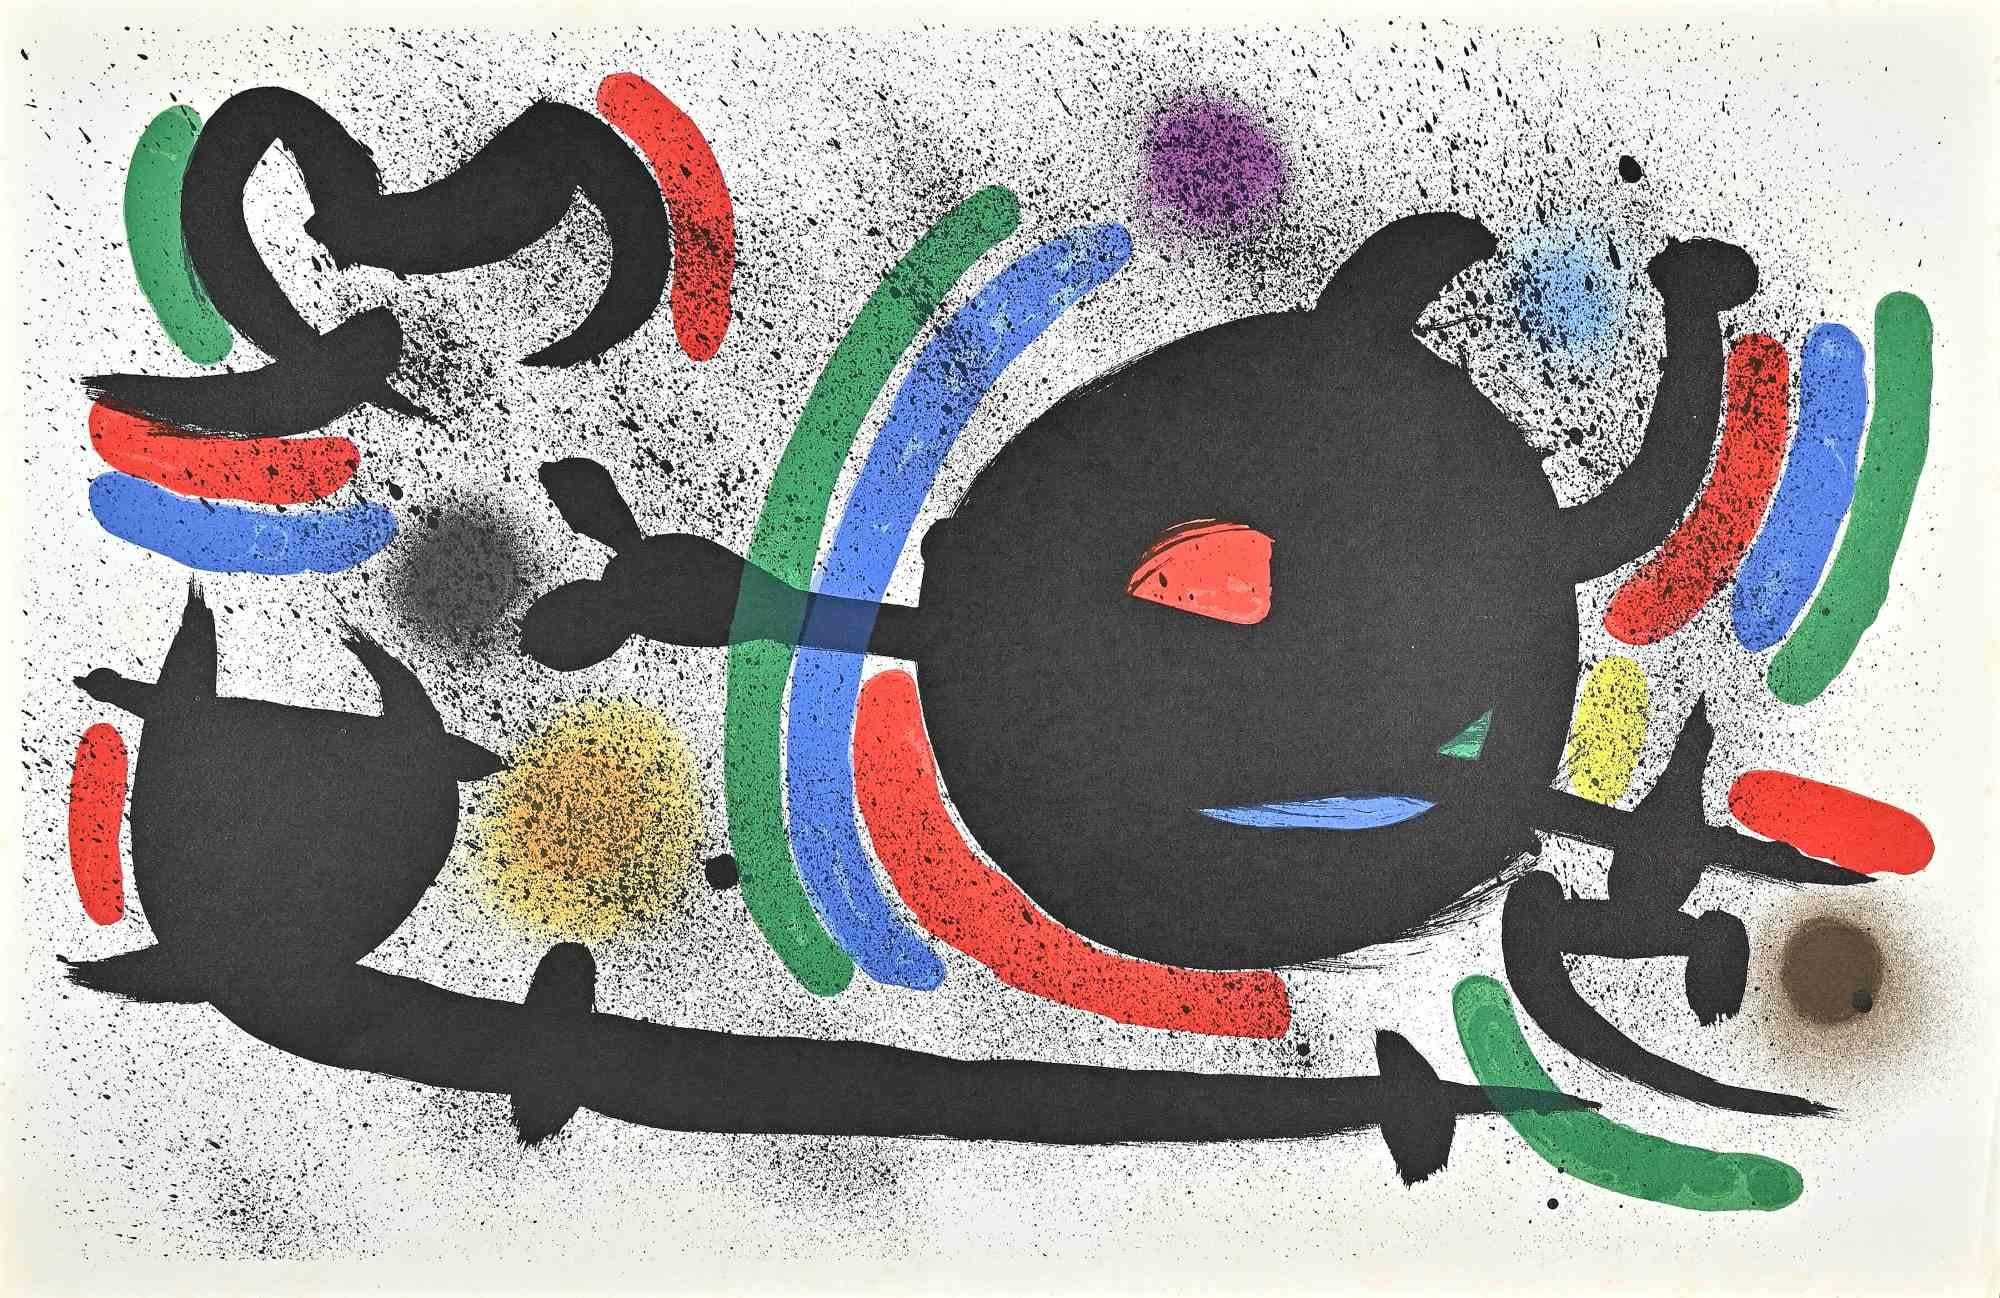 Abstract Print Joan Miró - Miró Lithographe I - Plaque X -  Lithographie de J. Mirò - 1972